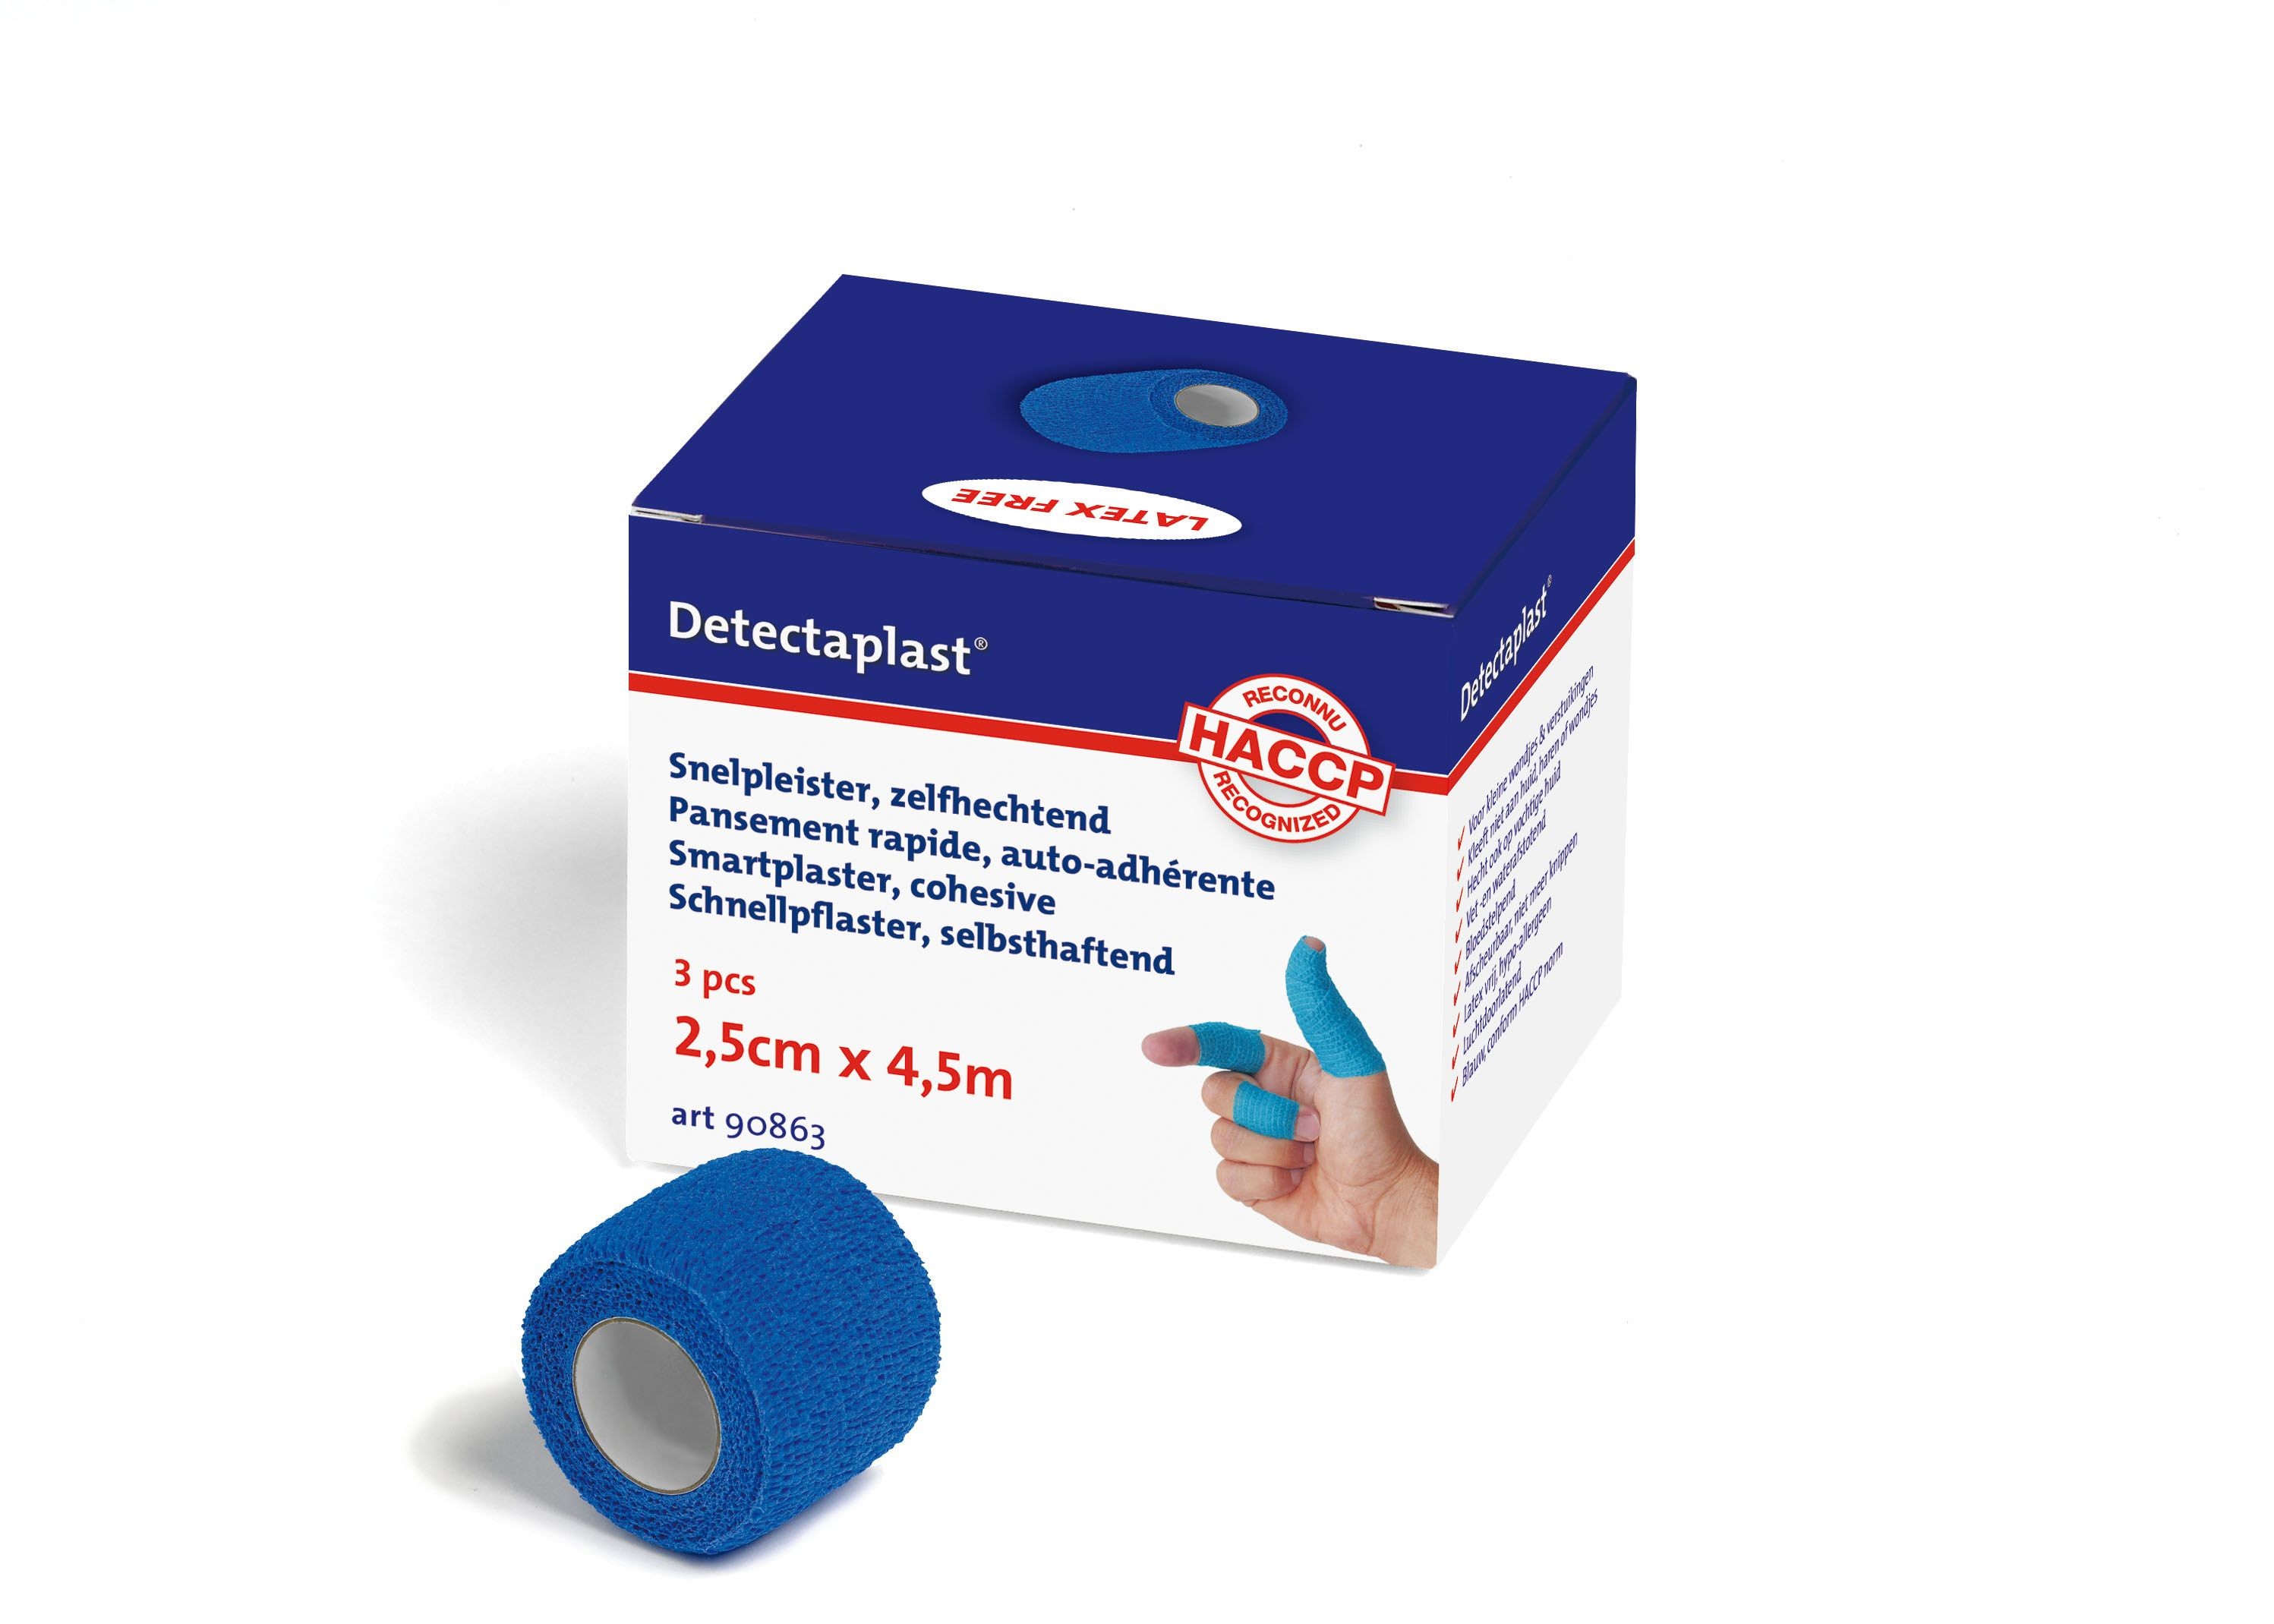 Detectaplast Pansement Rapide Auto-Adherente 2.5cmx4.5m bleu 3pc 